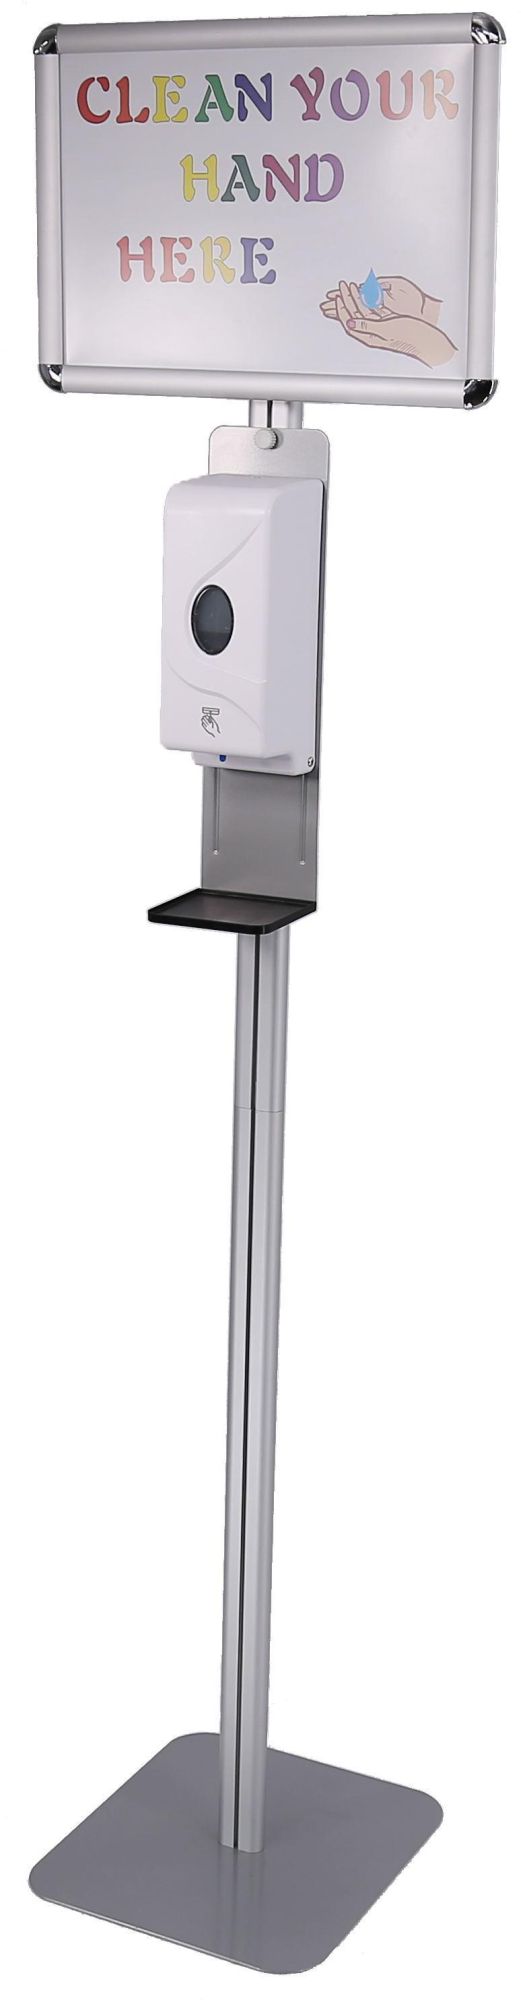 Soap Dispenser Hand Sanitizer Dispenser and Floor Stand Station Kit with A4 Poster Frame